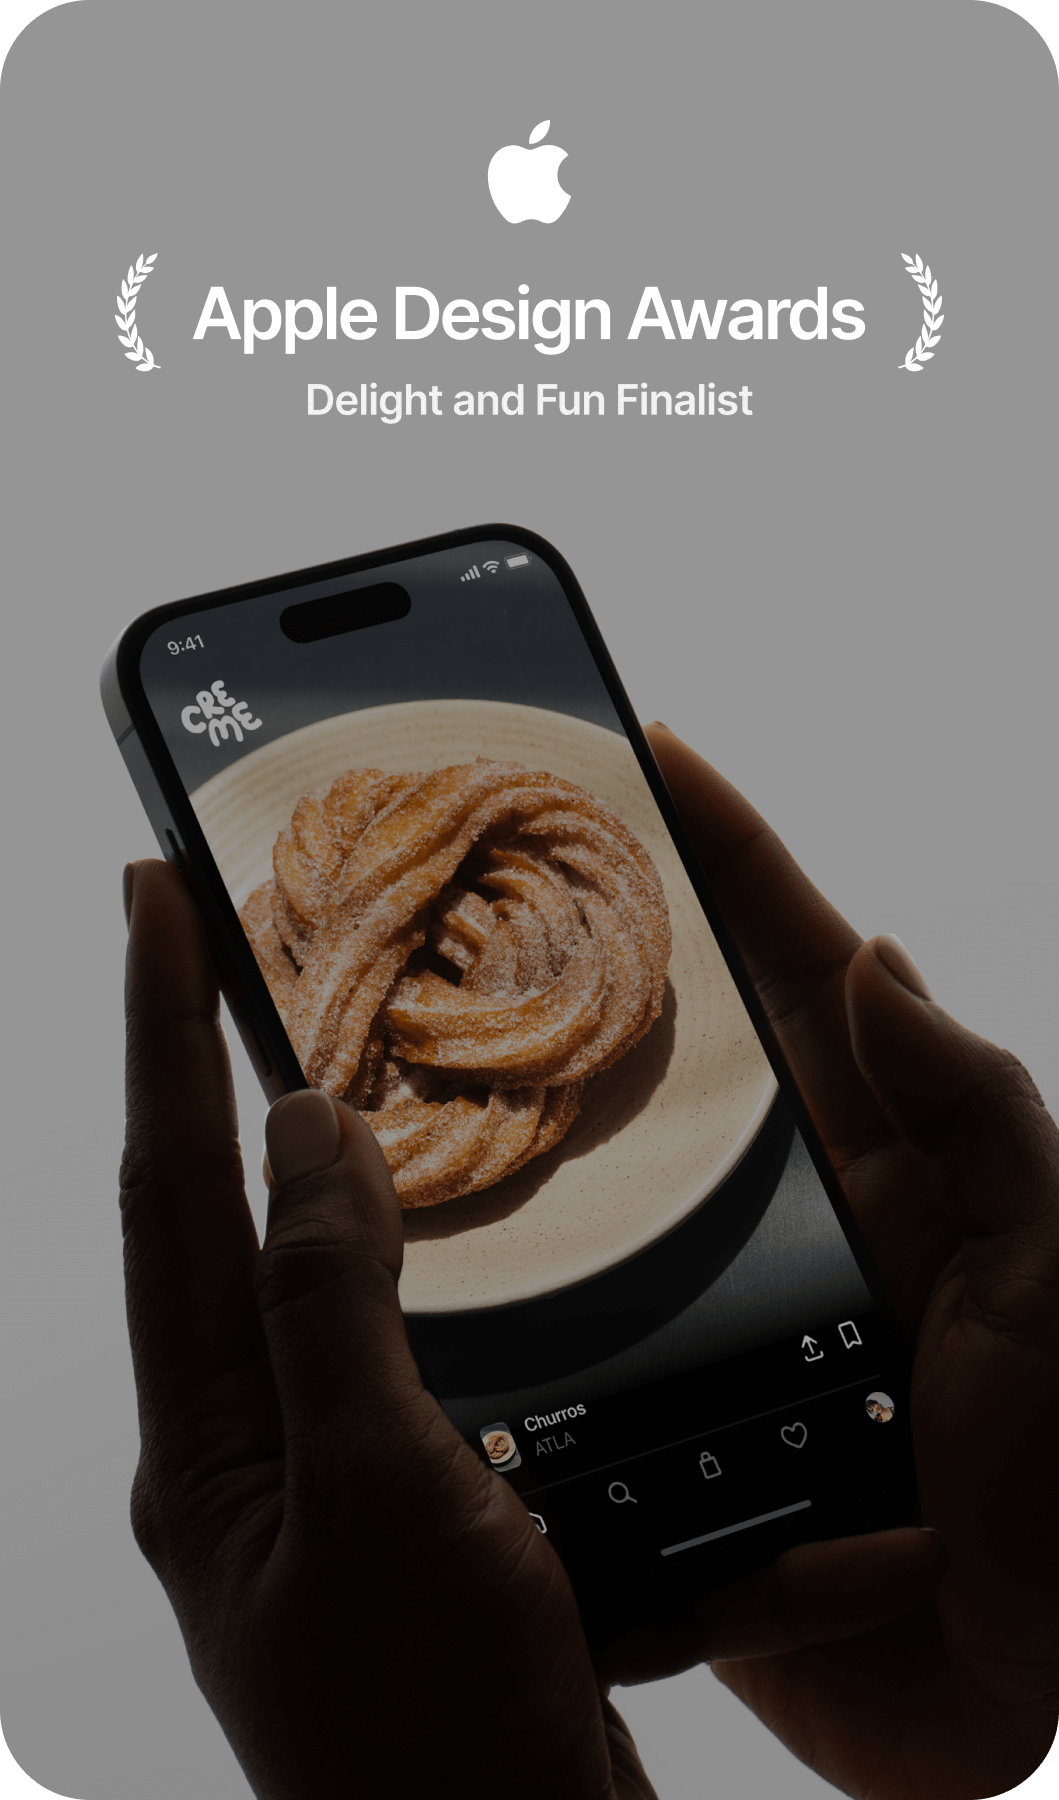 Apple design awards - Delight and Fun Finalist